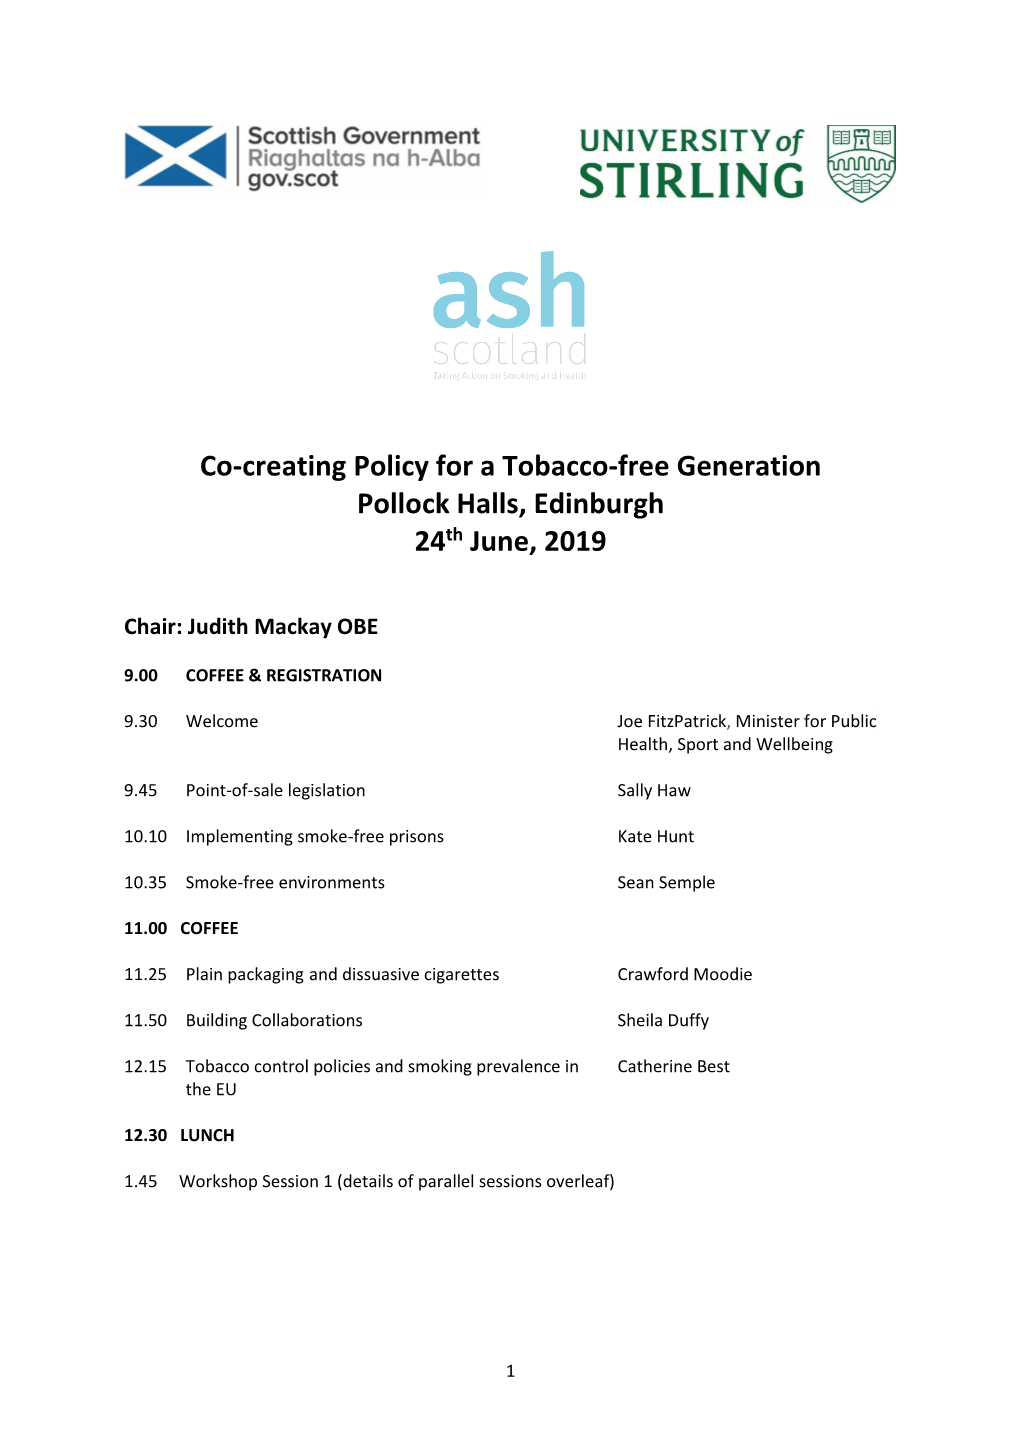 Co-Creating Policy for a Tobacco-Free Generation Pollock Halls, Edinburgh 24Th June, 2019